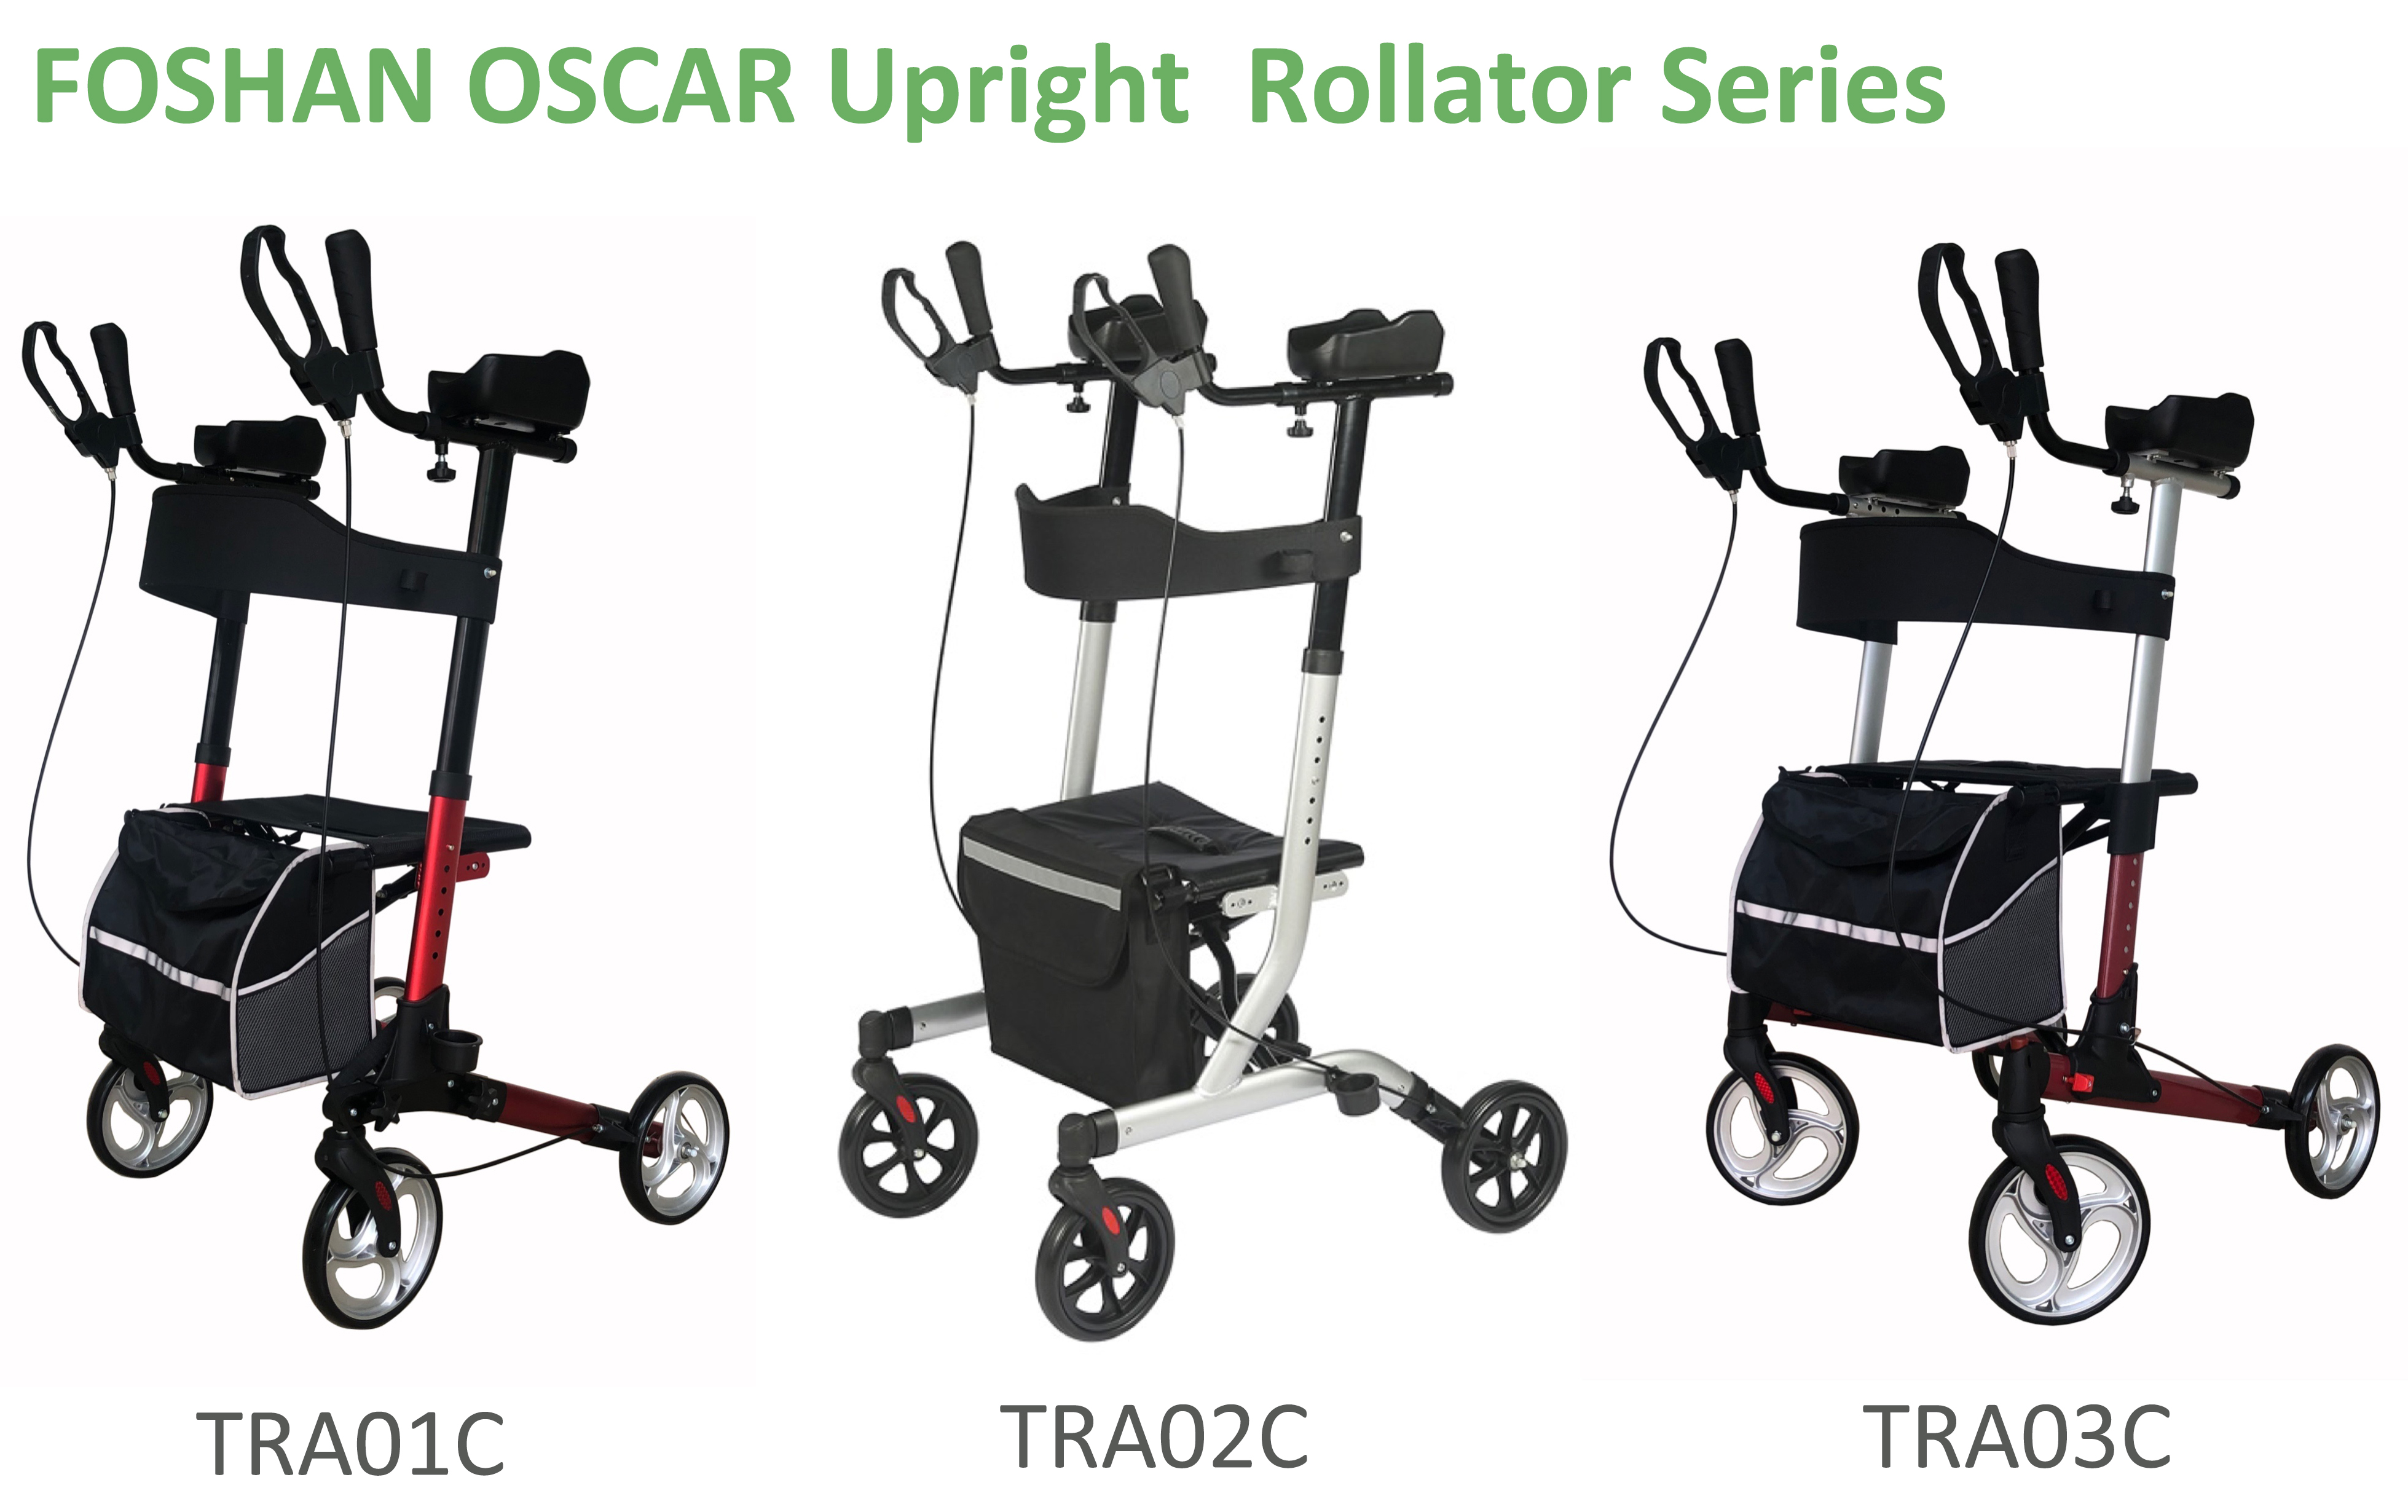 upright rollator